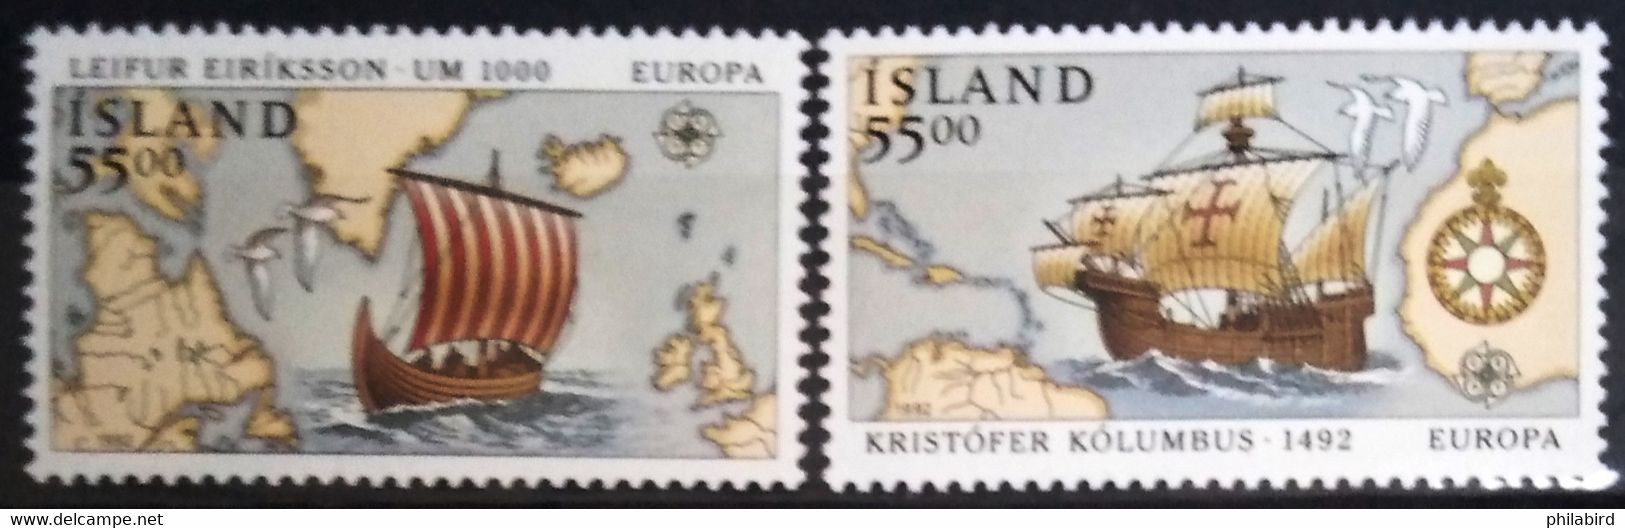 EUROPA 1992 - ISLANDE                    N° 715/716                        NEUF** - 1992